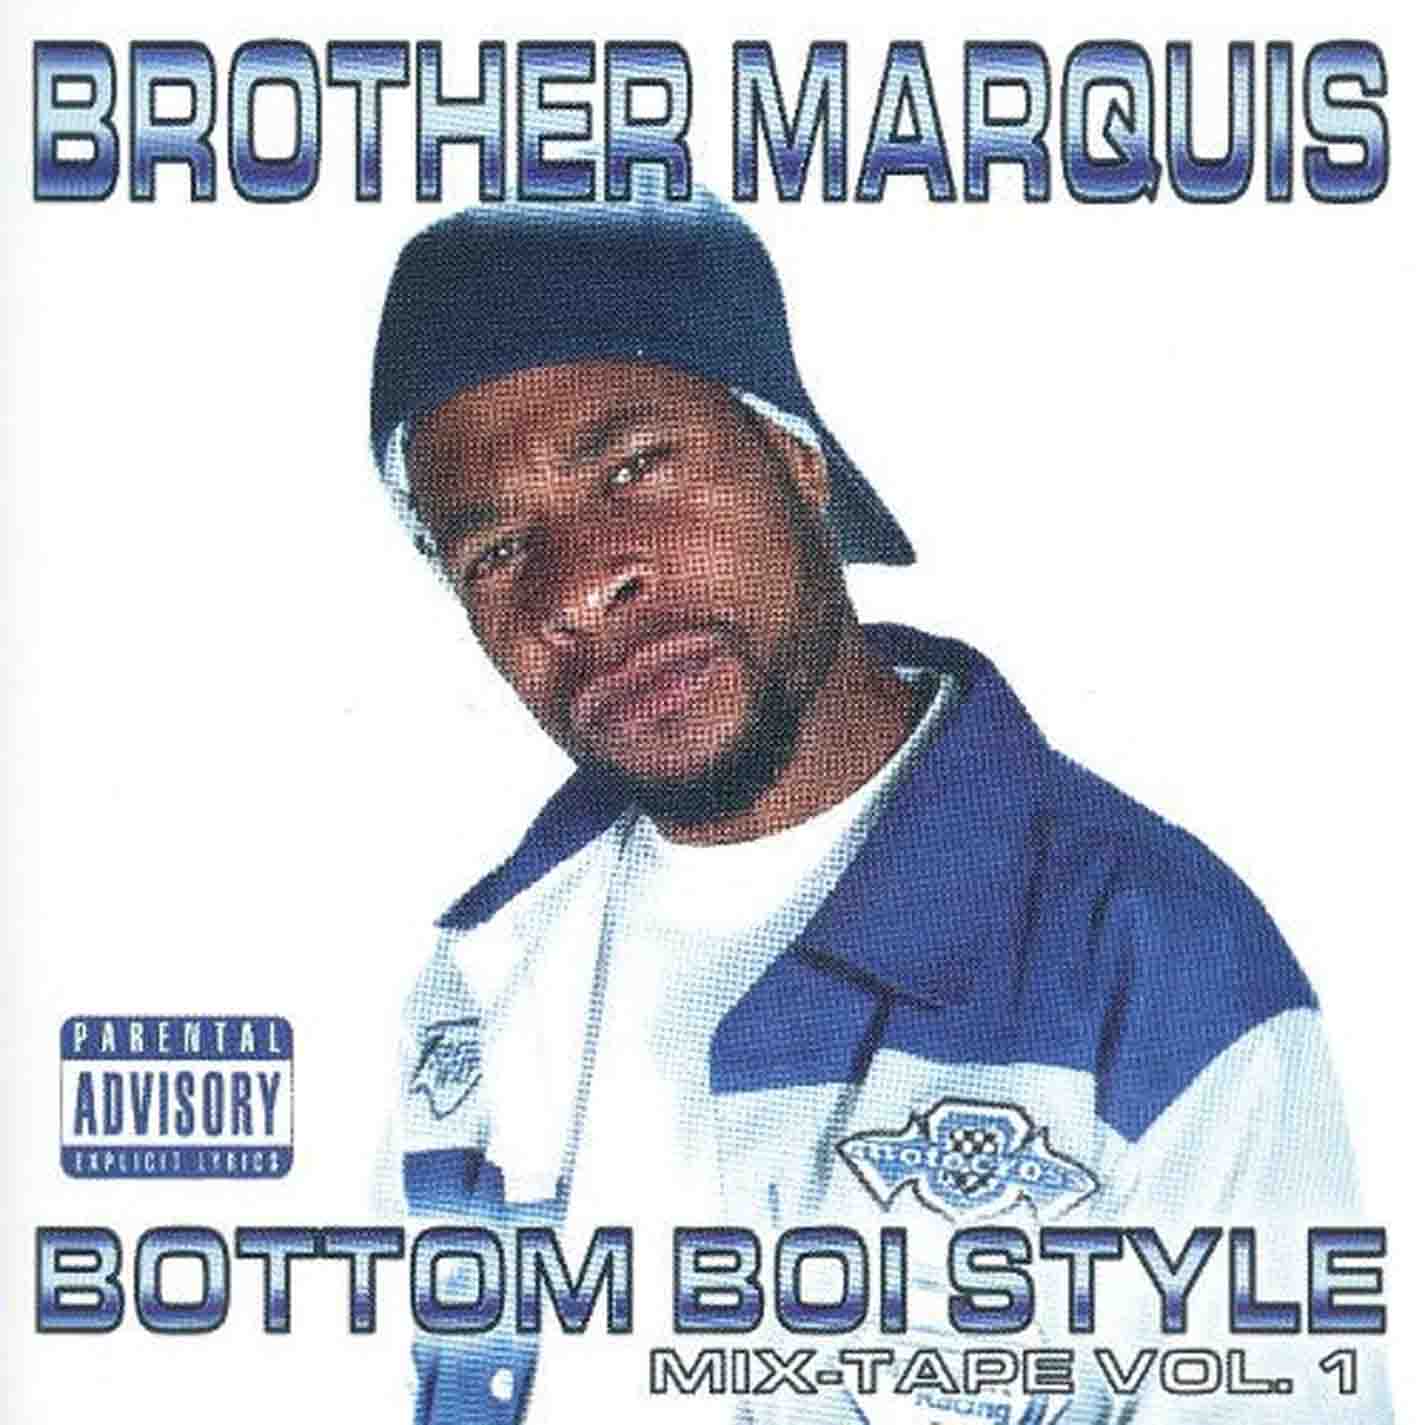 BROTHER MARQUIS - BOTTOM BOI STYLE MIXTAPE VOL 1 (CD LP) c2003